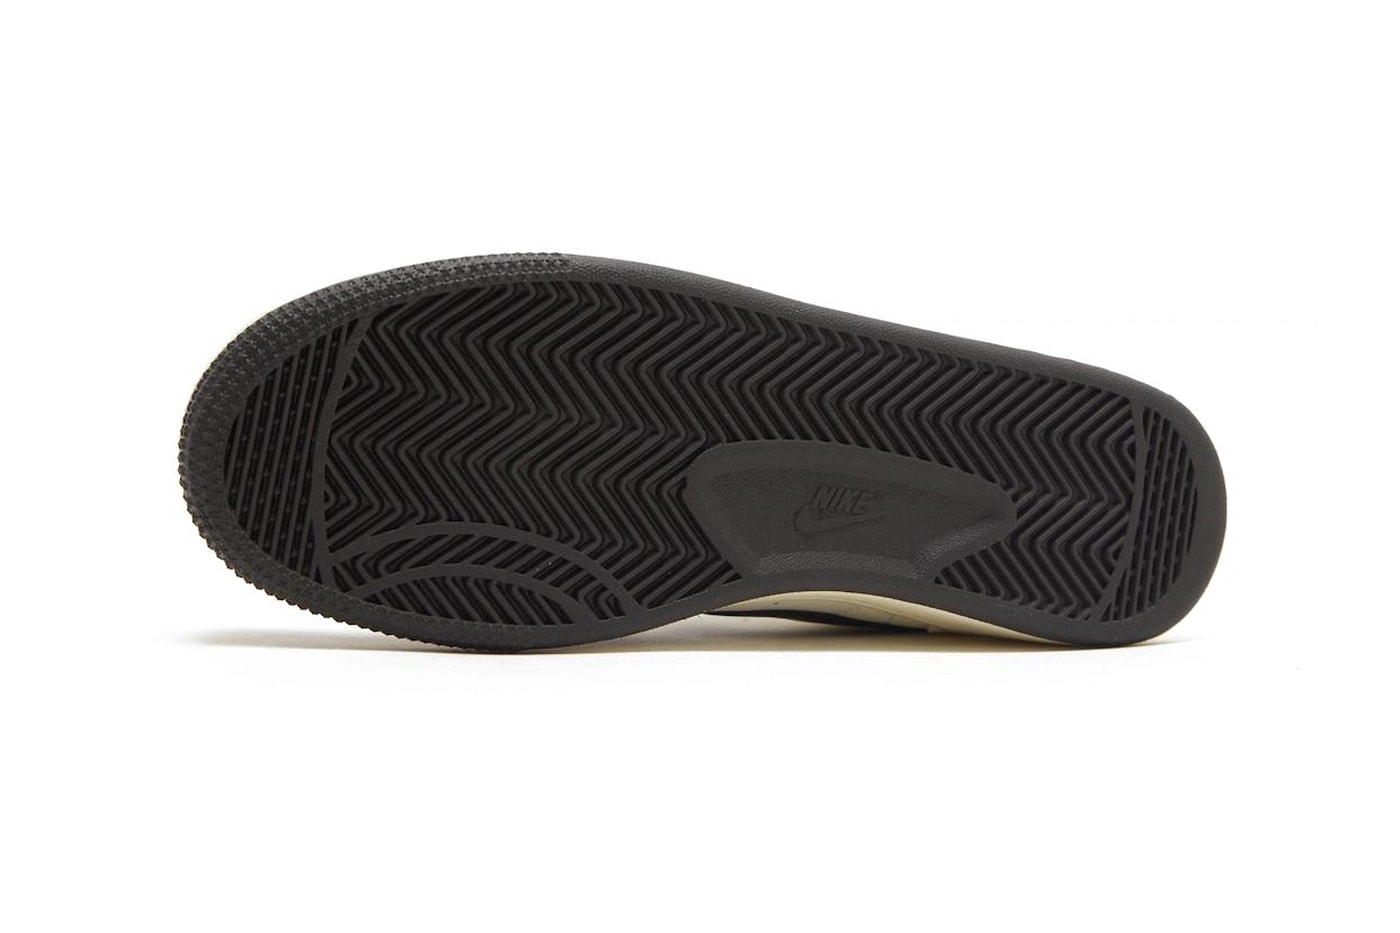 Nike Terminator Low Brown Croc Release Info FN7815-200 Date Buy Price 